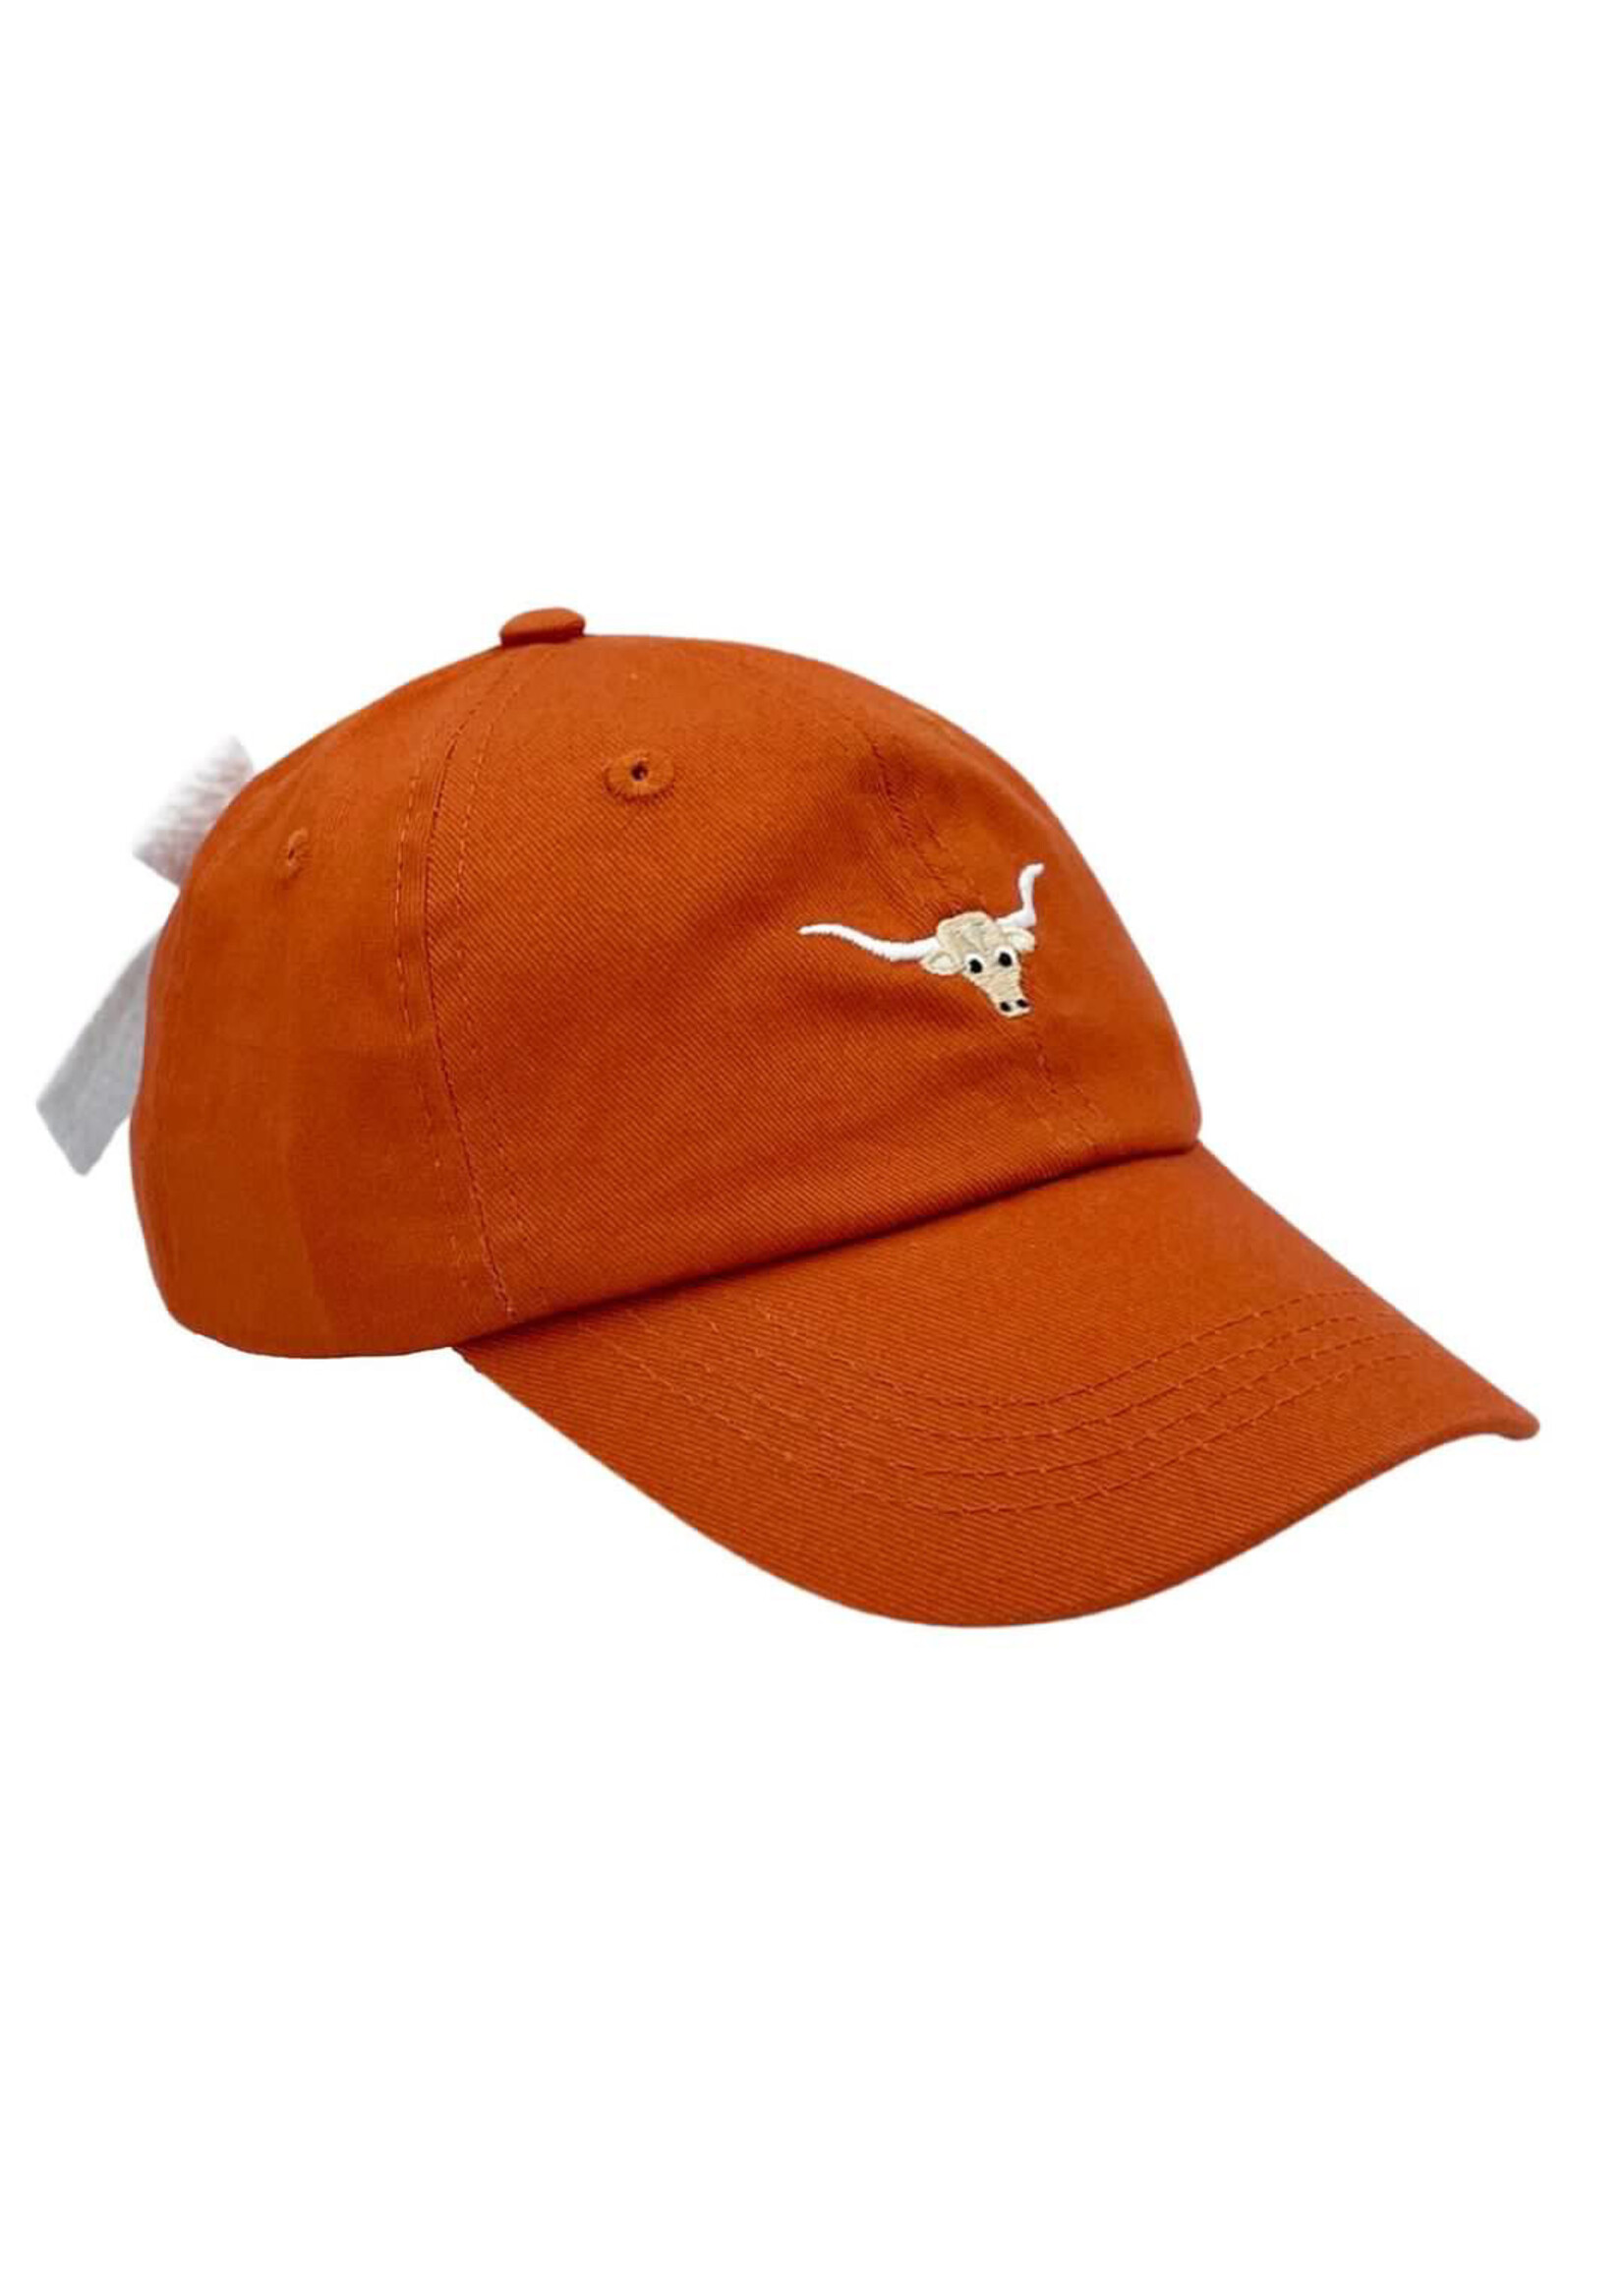 Bits & Bows Bits & Bows Girls Longhorn Hat -Burnt Orange with Bow